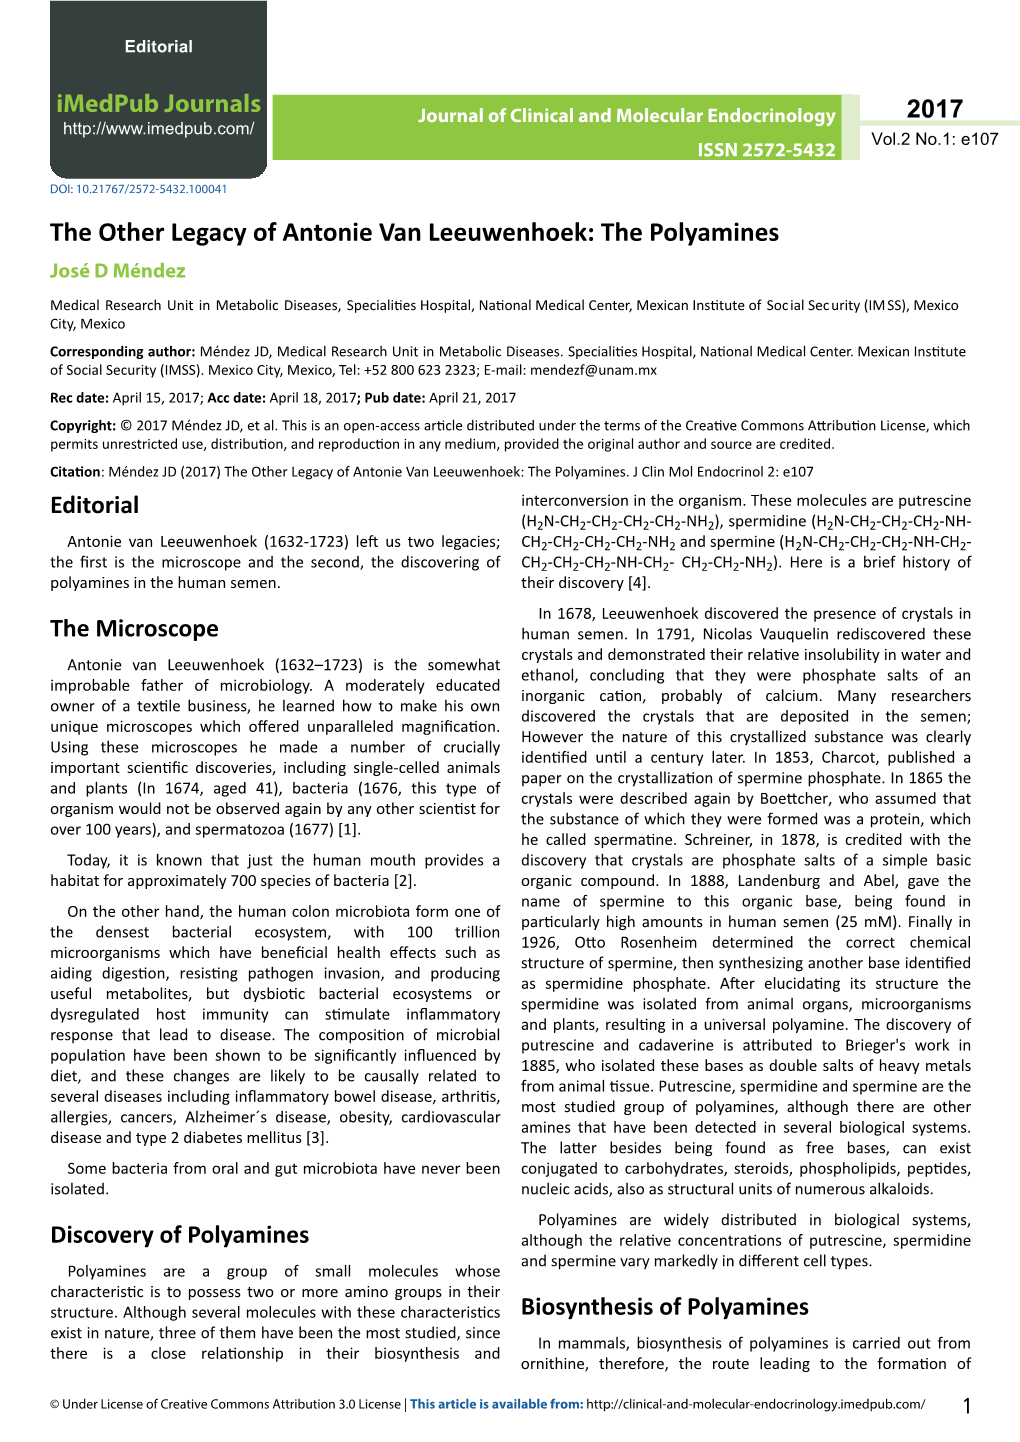 The Other Legacy of Antonie Van Leeuwenhoek: the Polyamines José D Méndez